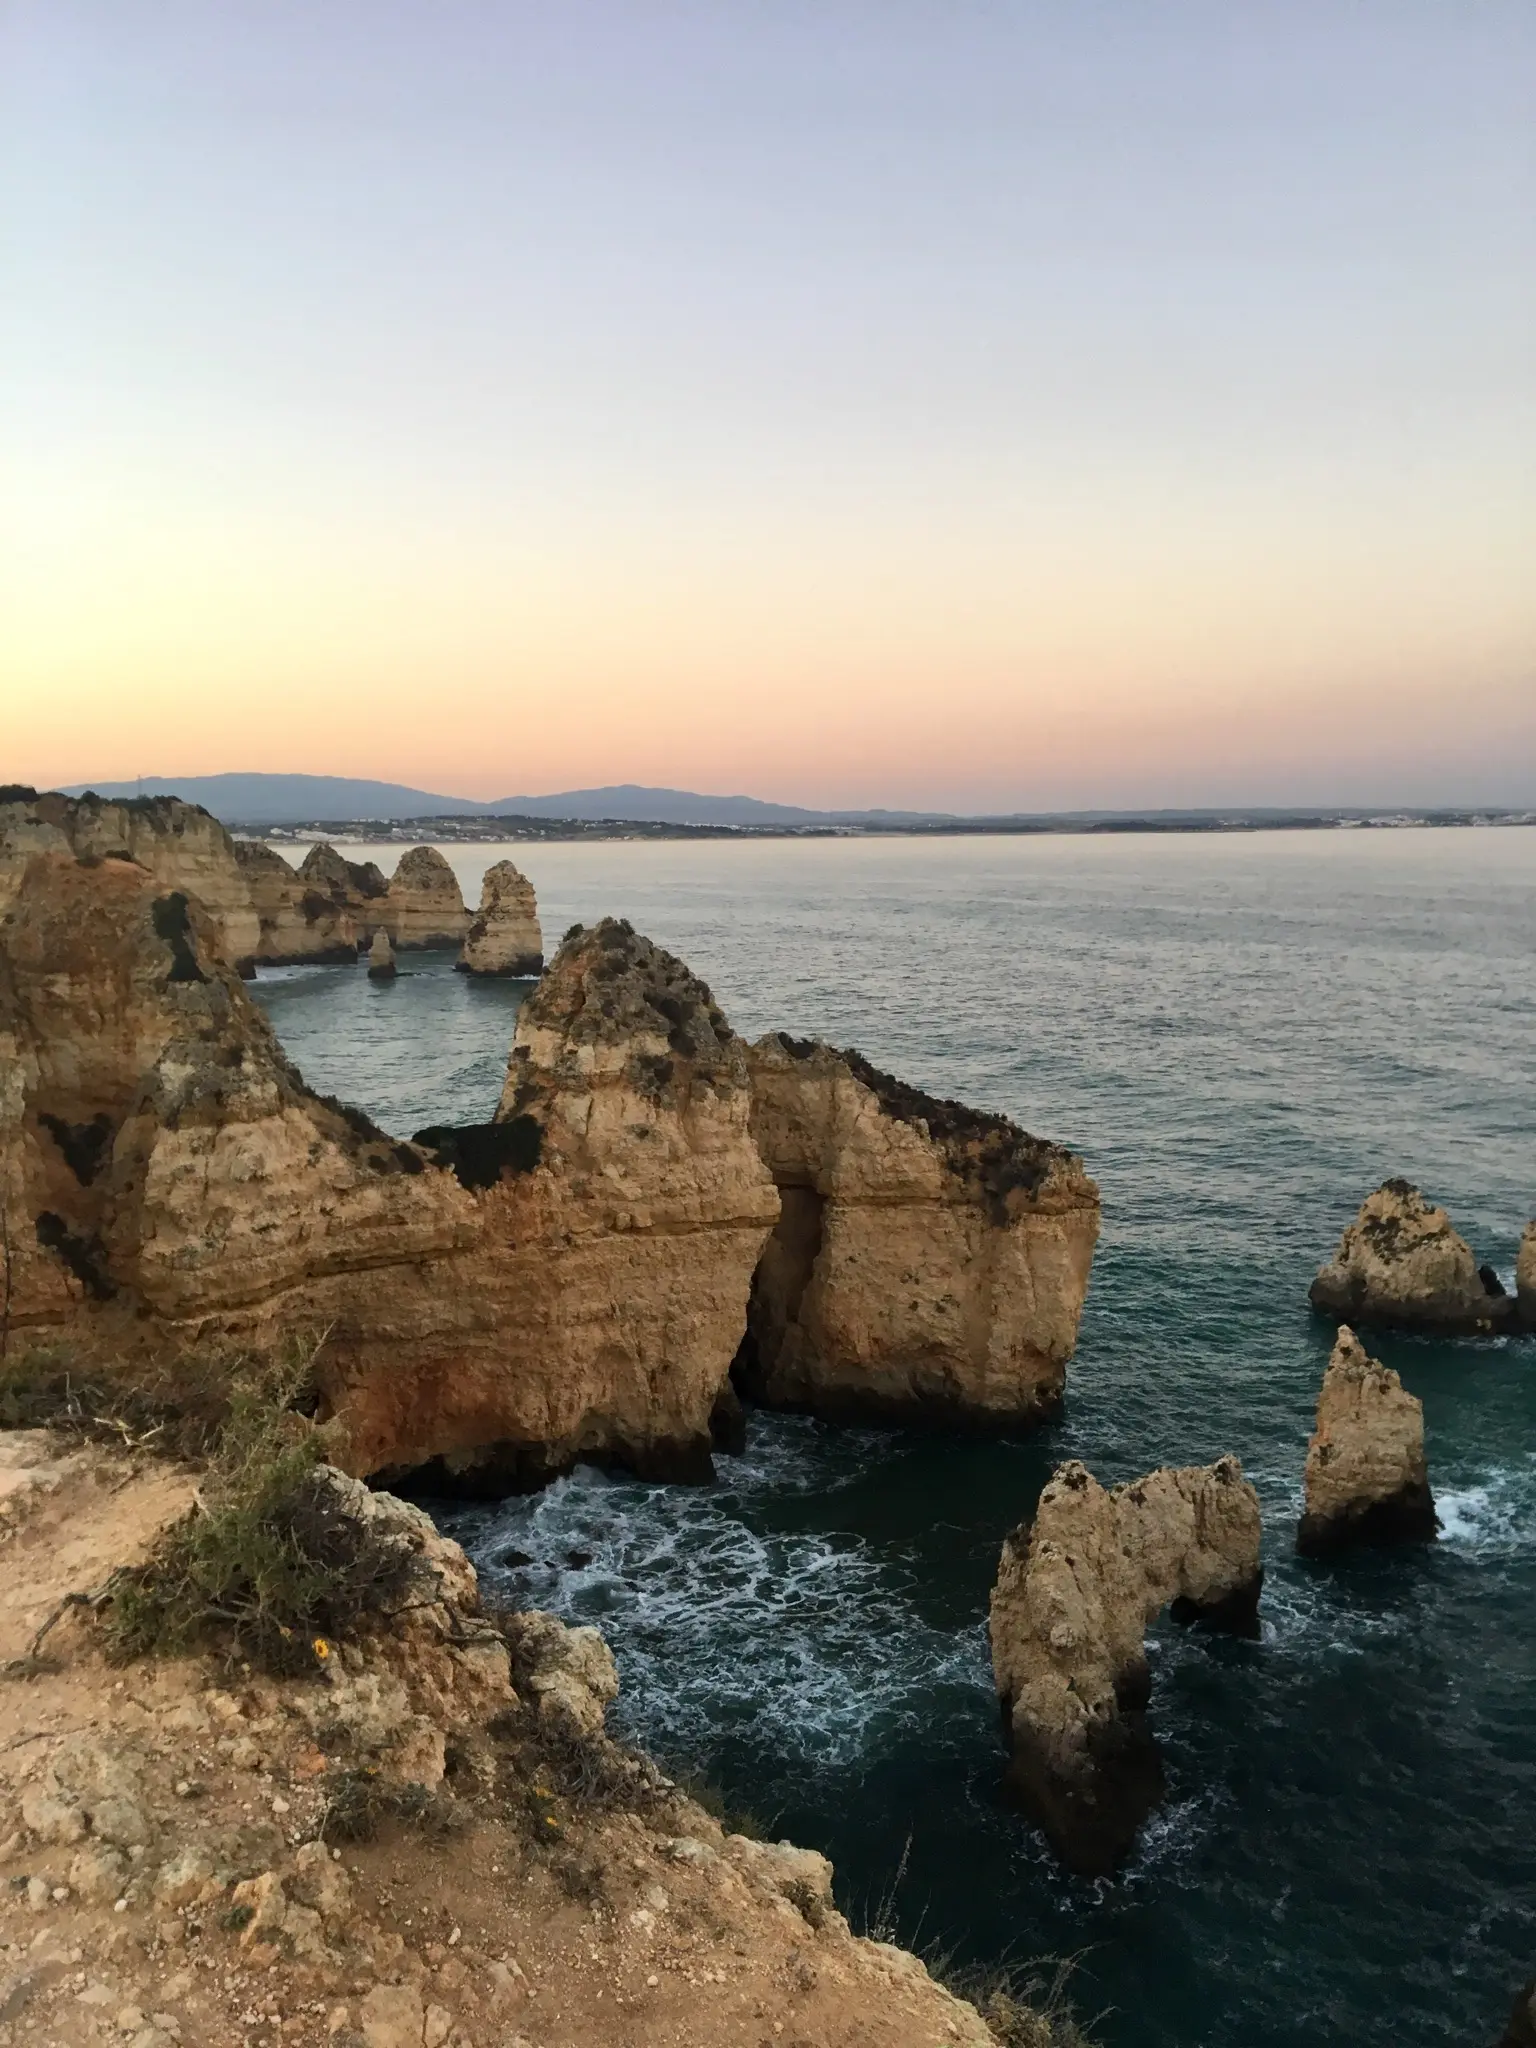 30. "Sonnenuntergangsträume an der Algarve"